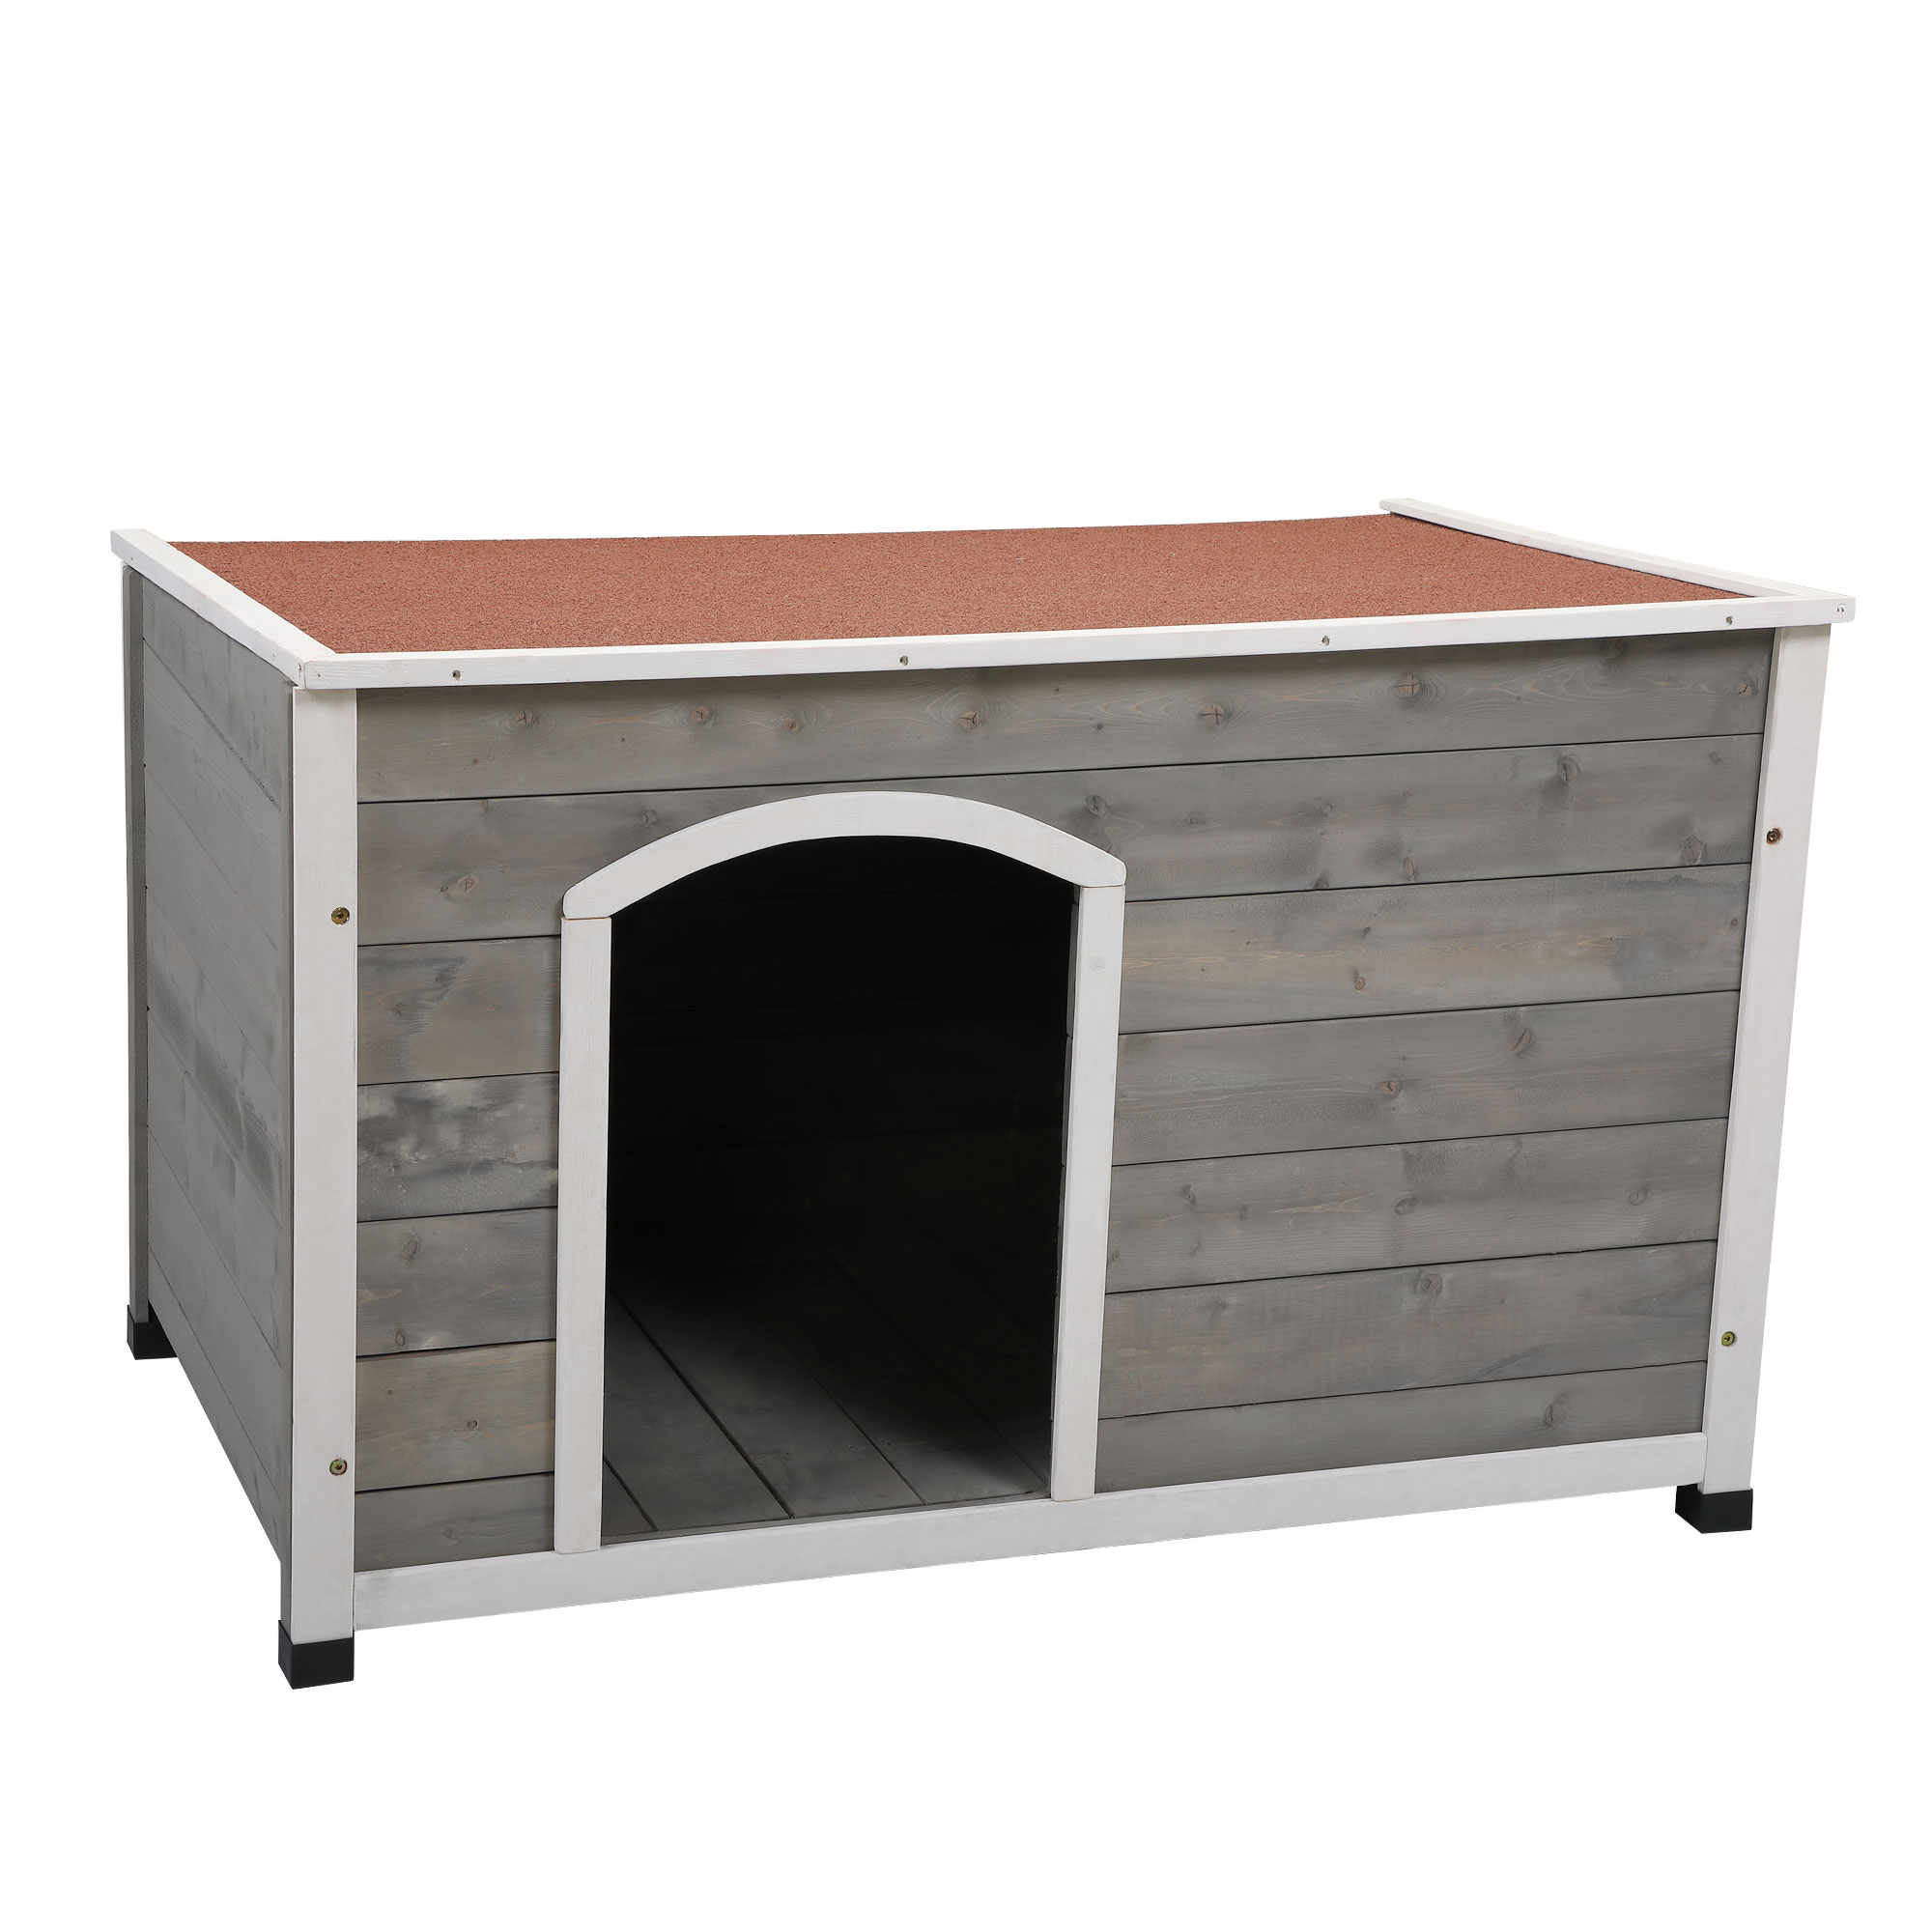 Outdoor Wood Dog House, Dog Cabin with Weatherproof Roof and Open Door, Easy to Clean-CASAINC